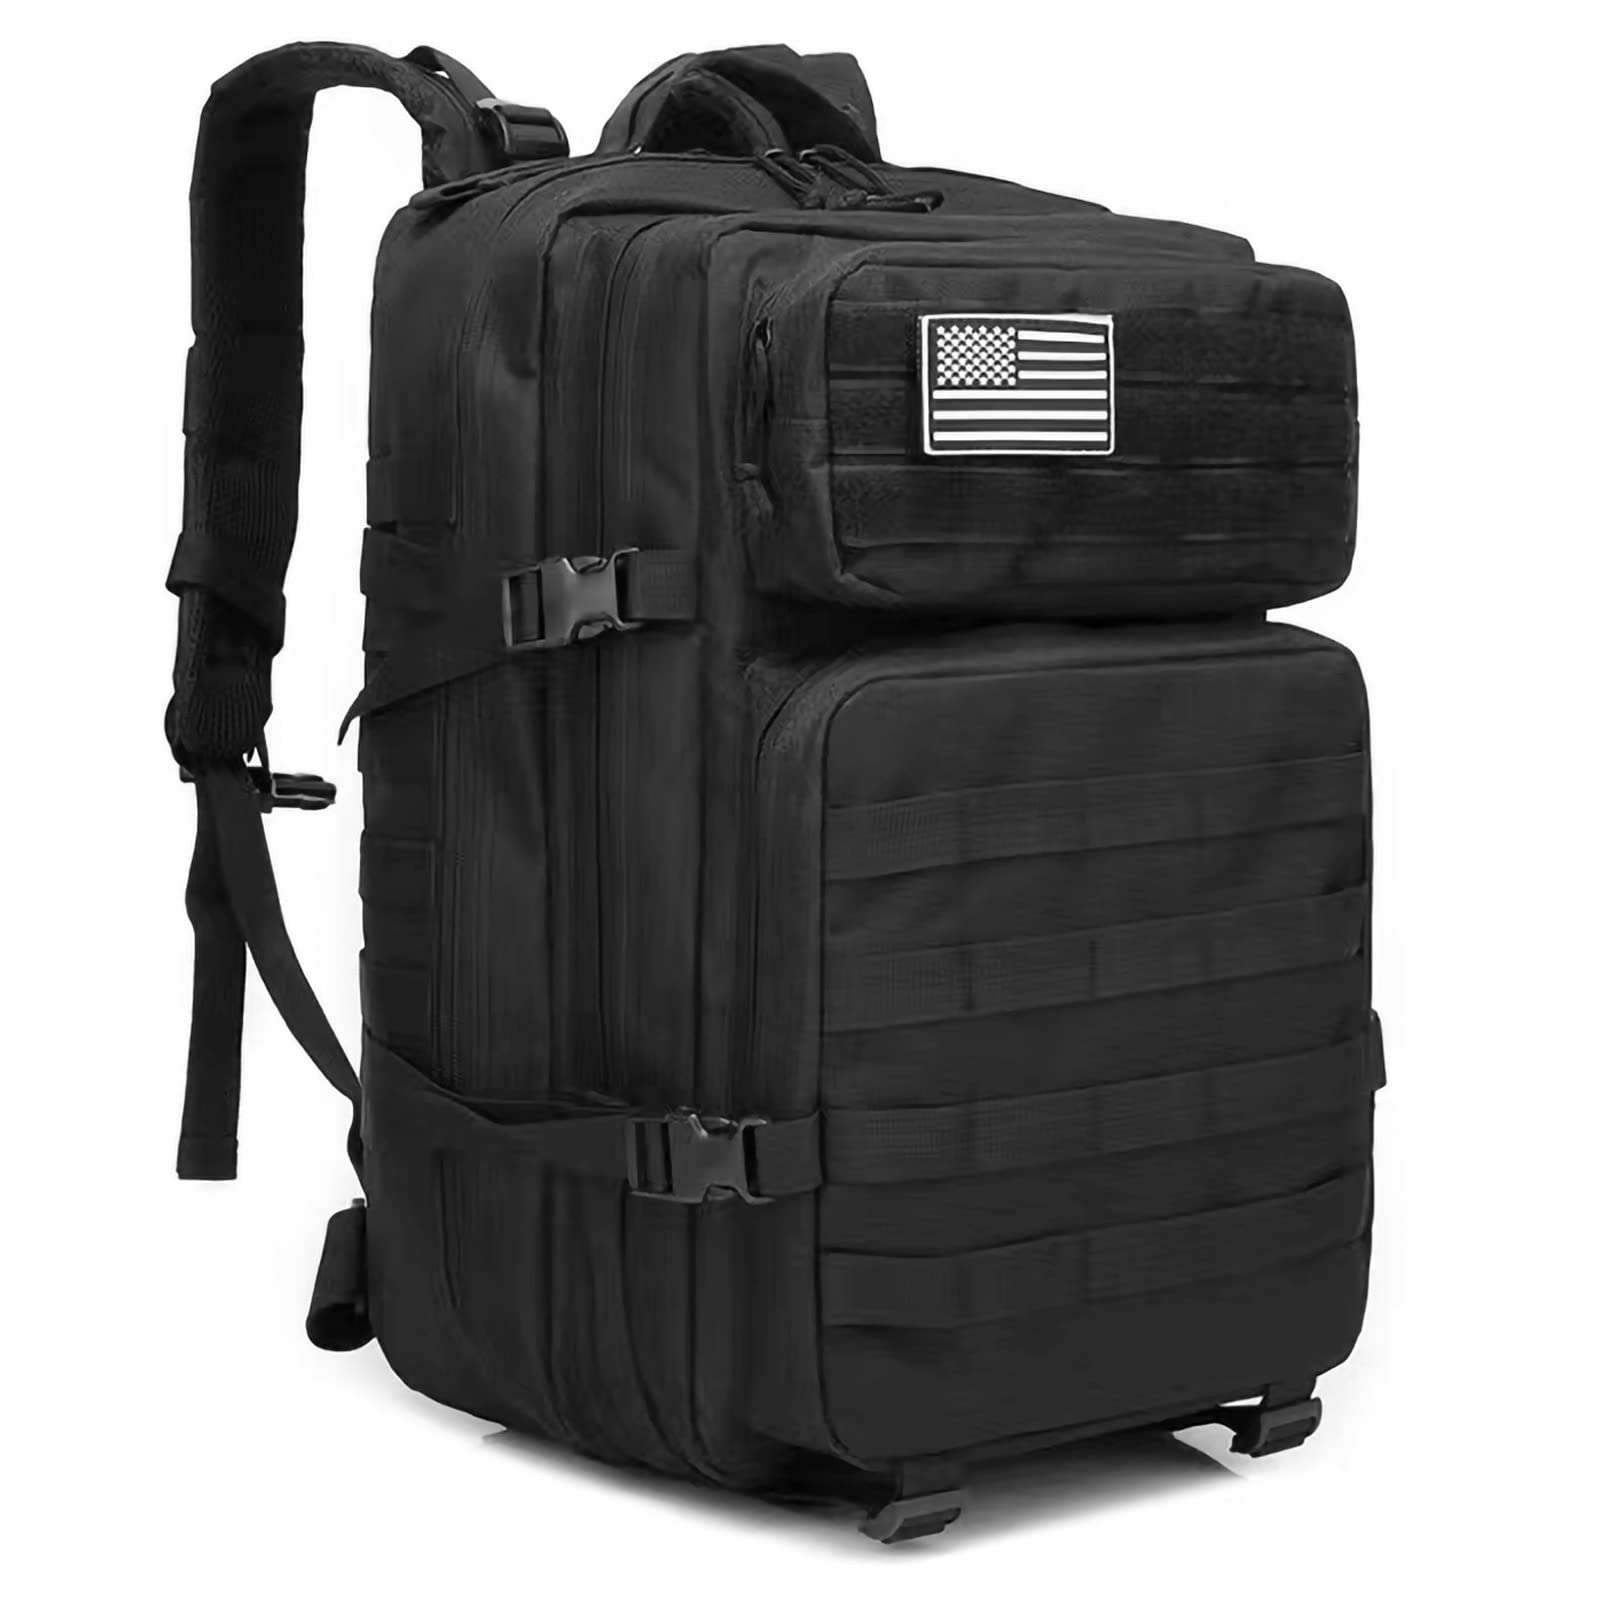 Oreunik Military Rucksack 45L Waterproof Tactical Backpack Molle Backpacks Large Assault pack for Outdoor Trekking,Camping,Hiking,etc.